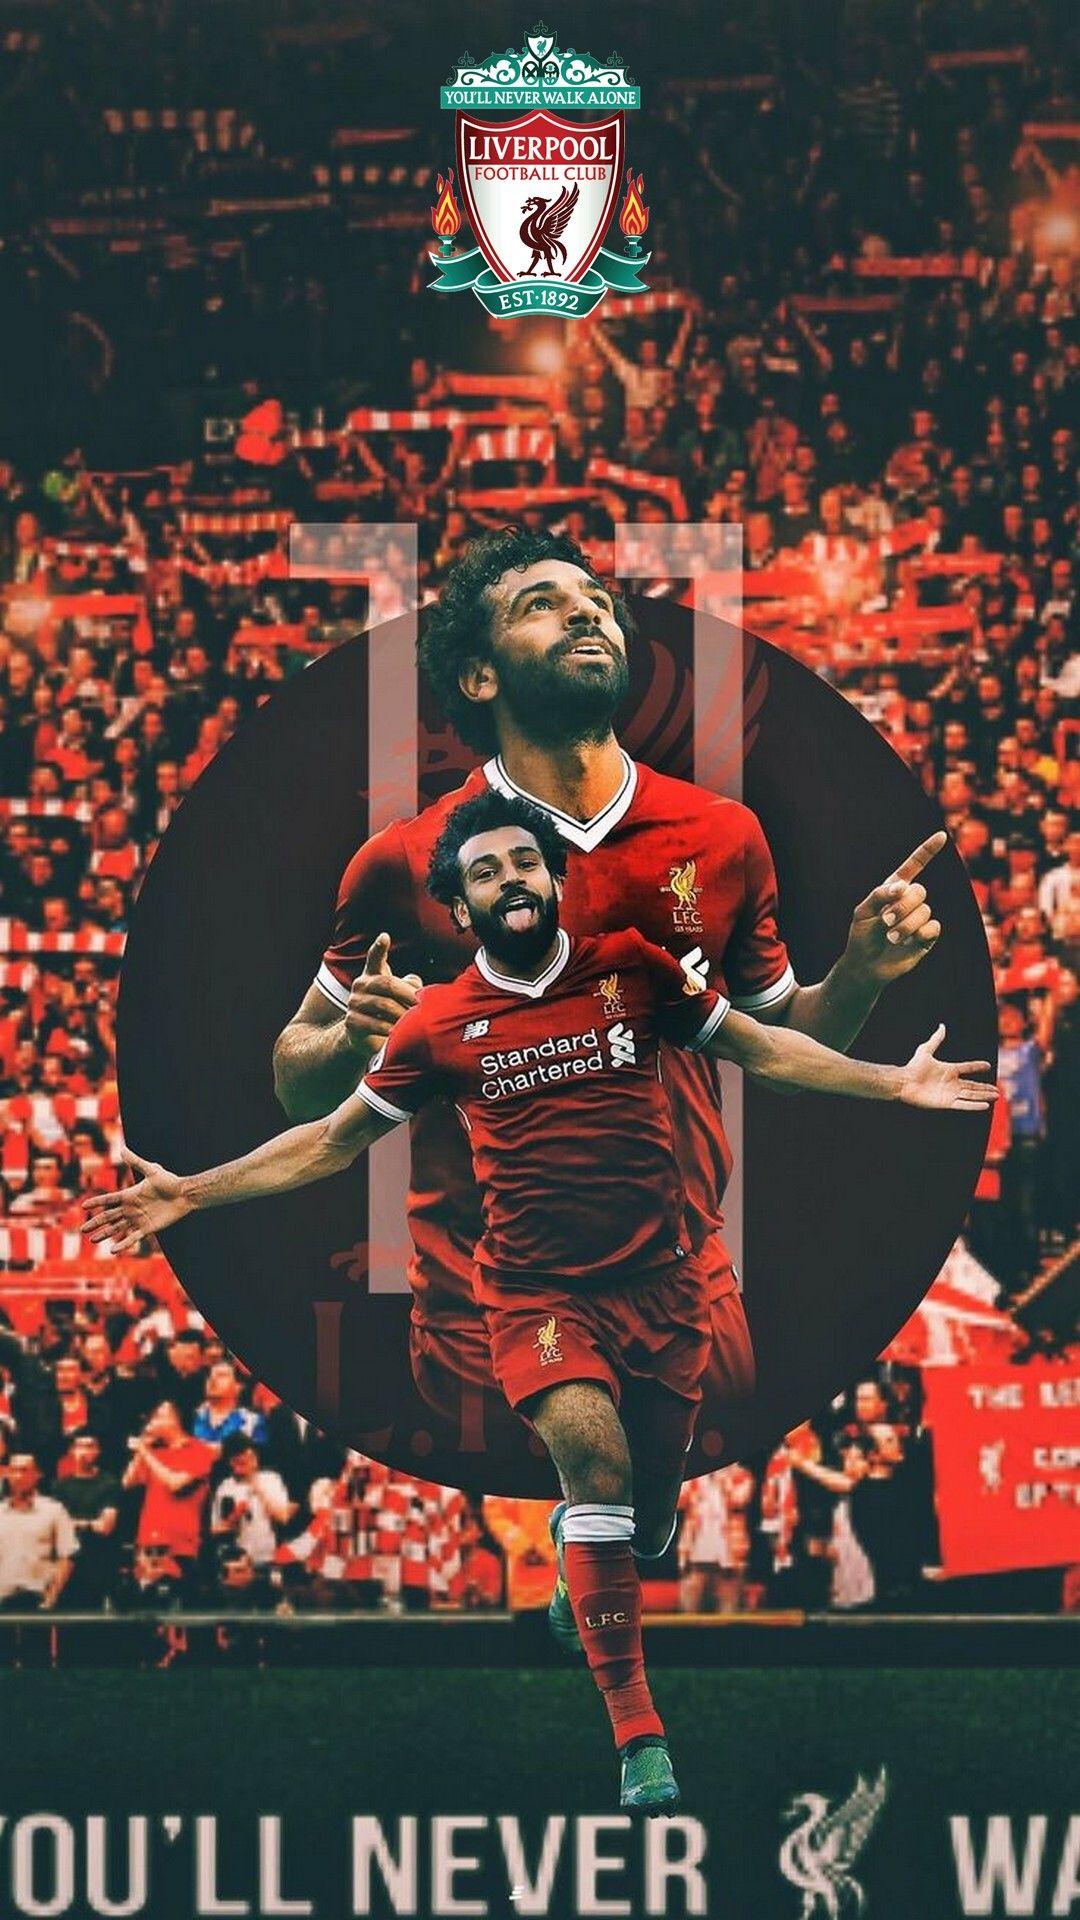 Liverpool Mohamed Salah Wallpaper Android. iPhoneWallpaper